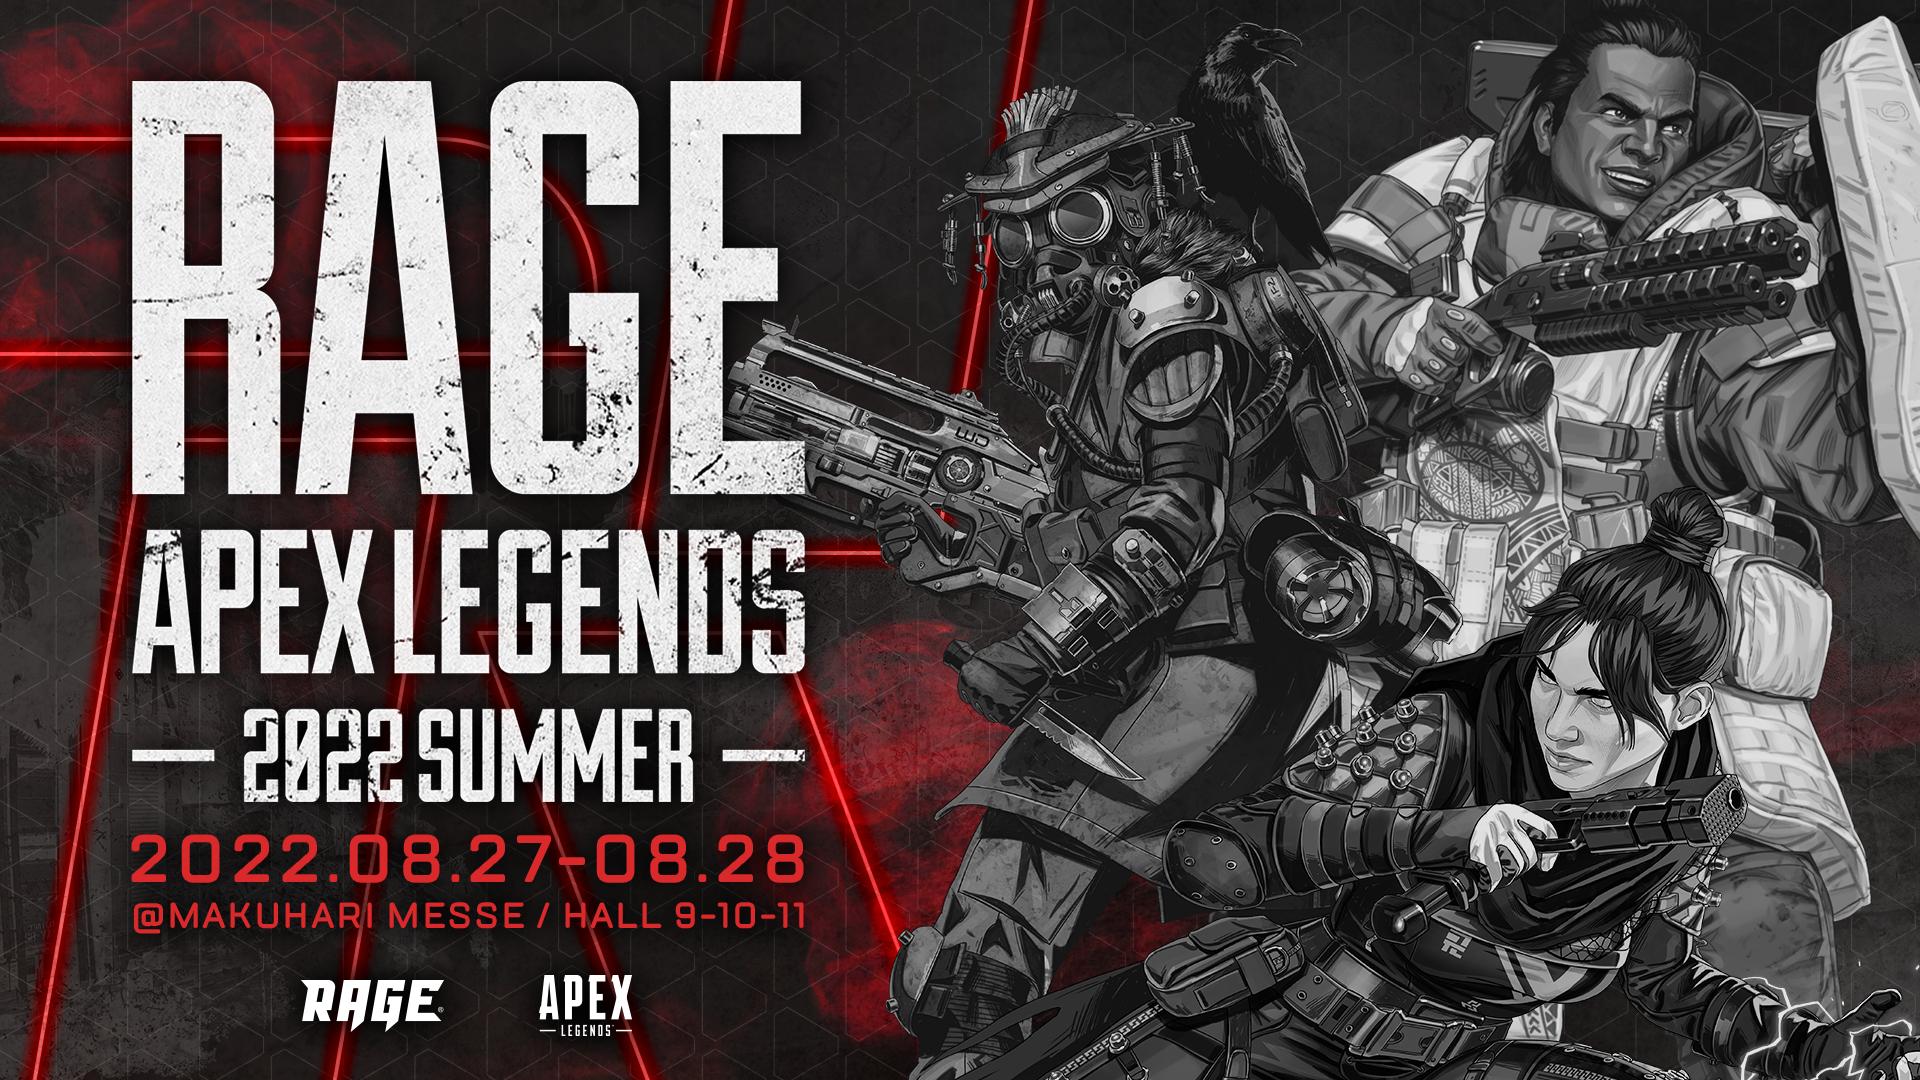 RAGE Apex Legends 2022 Summerの見出し画像